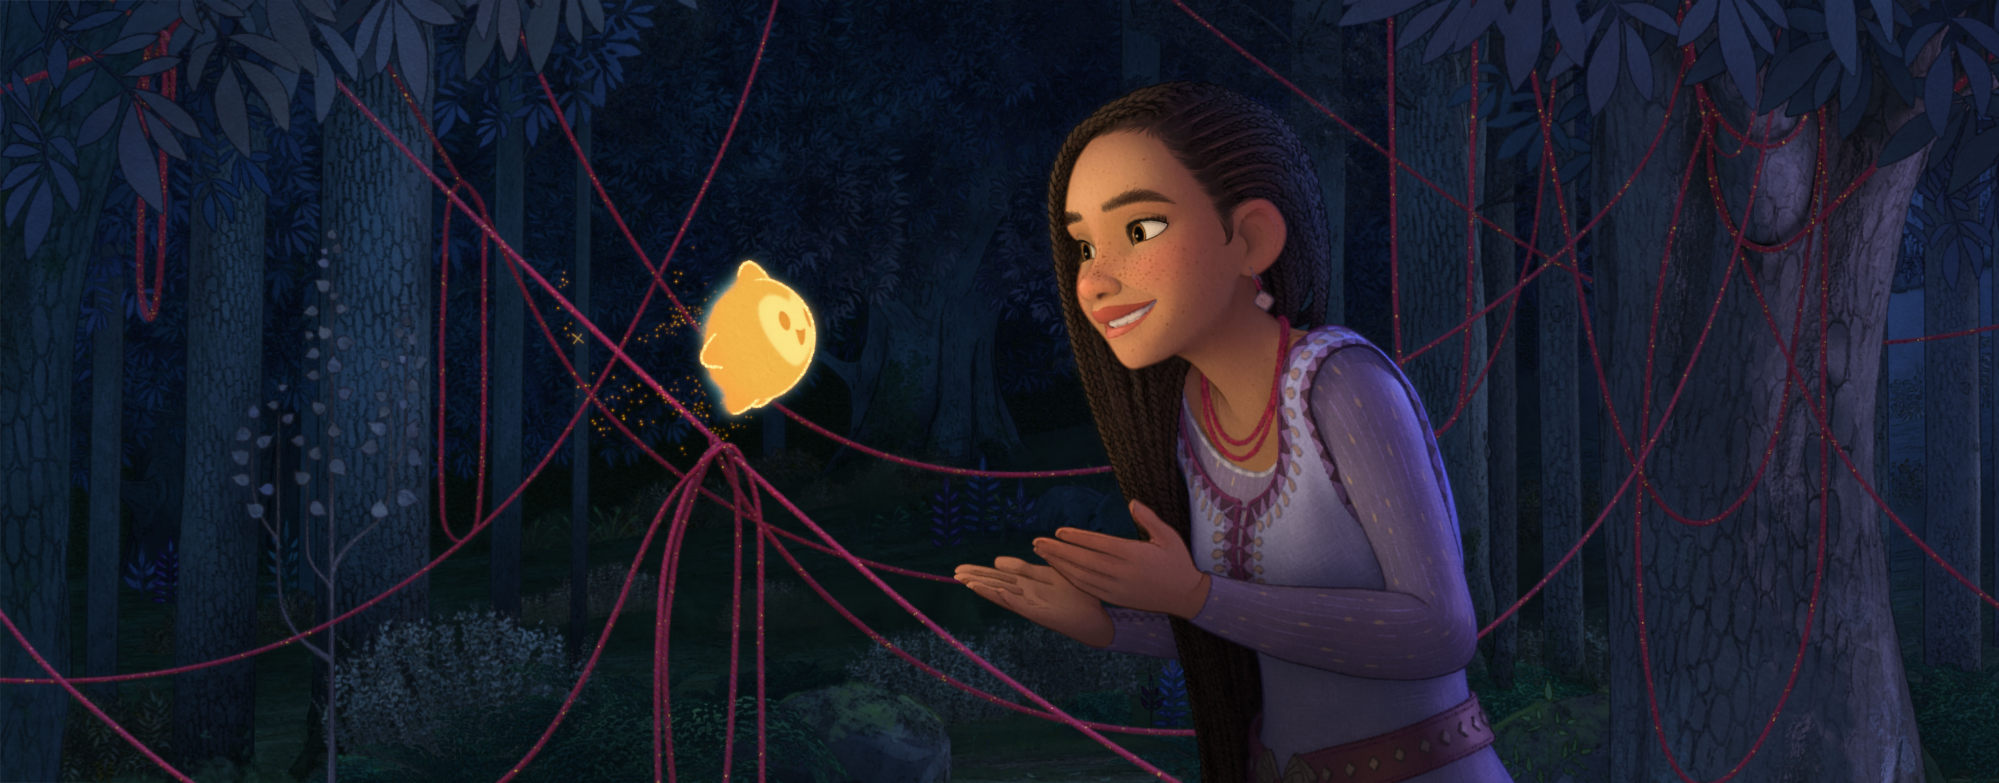 Hear Disney's 'Wish' Movie Soundtrack Before Anyone Else